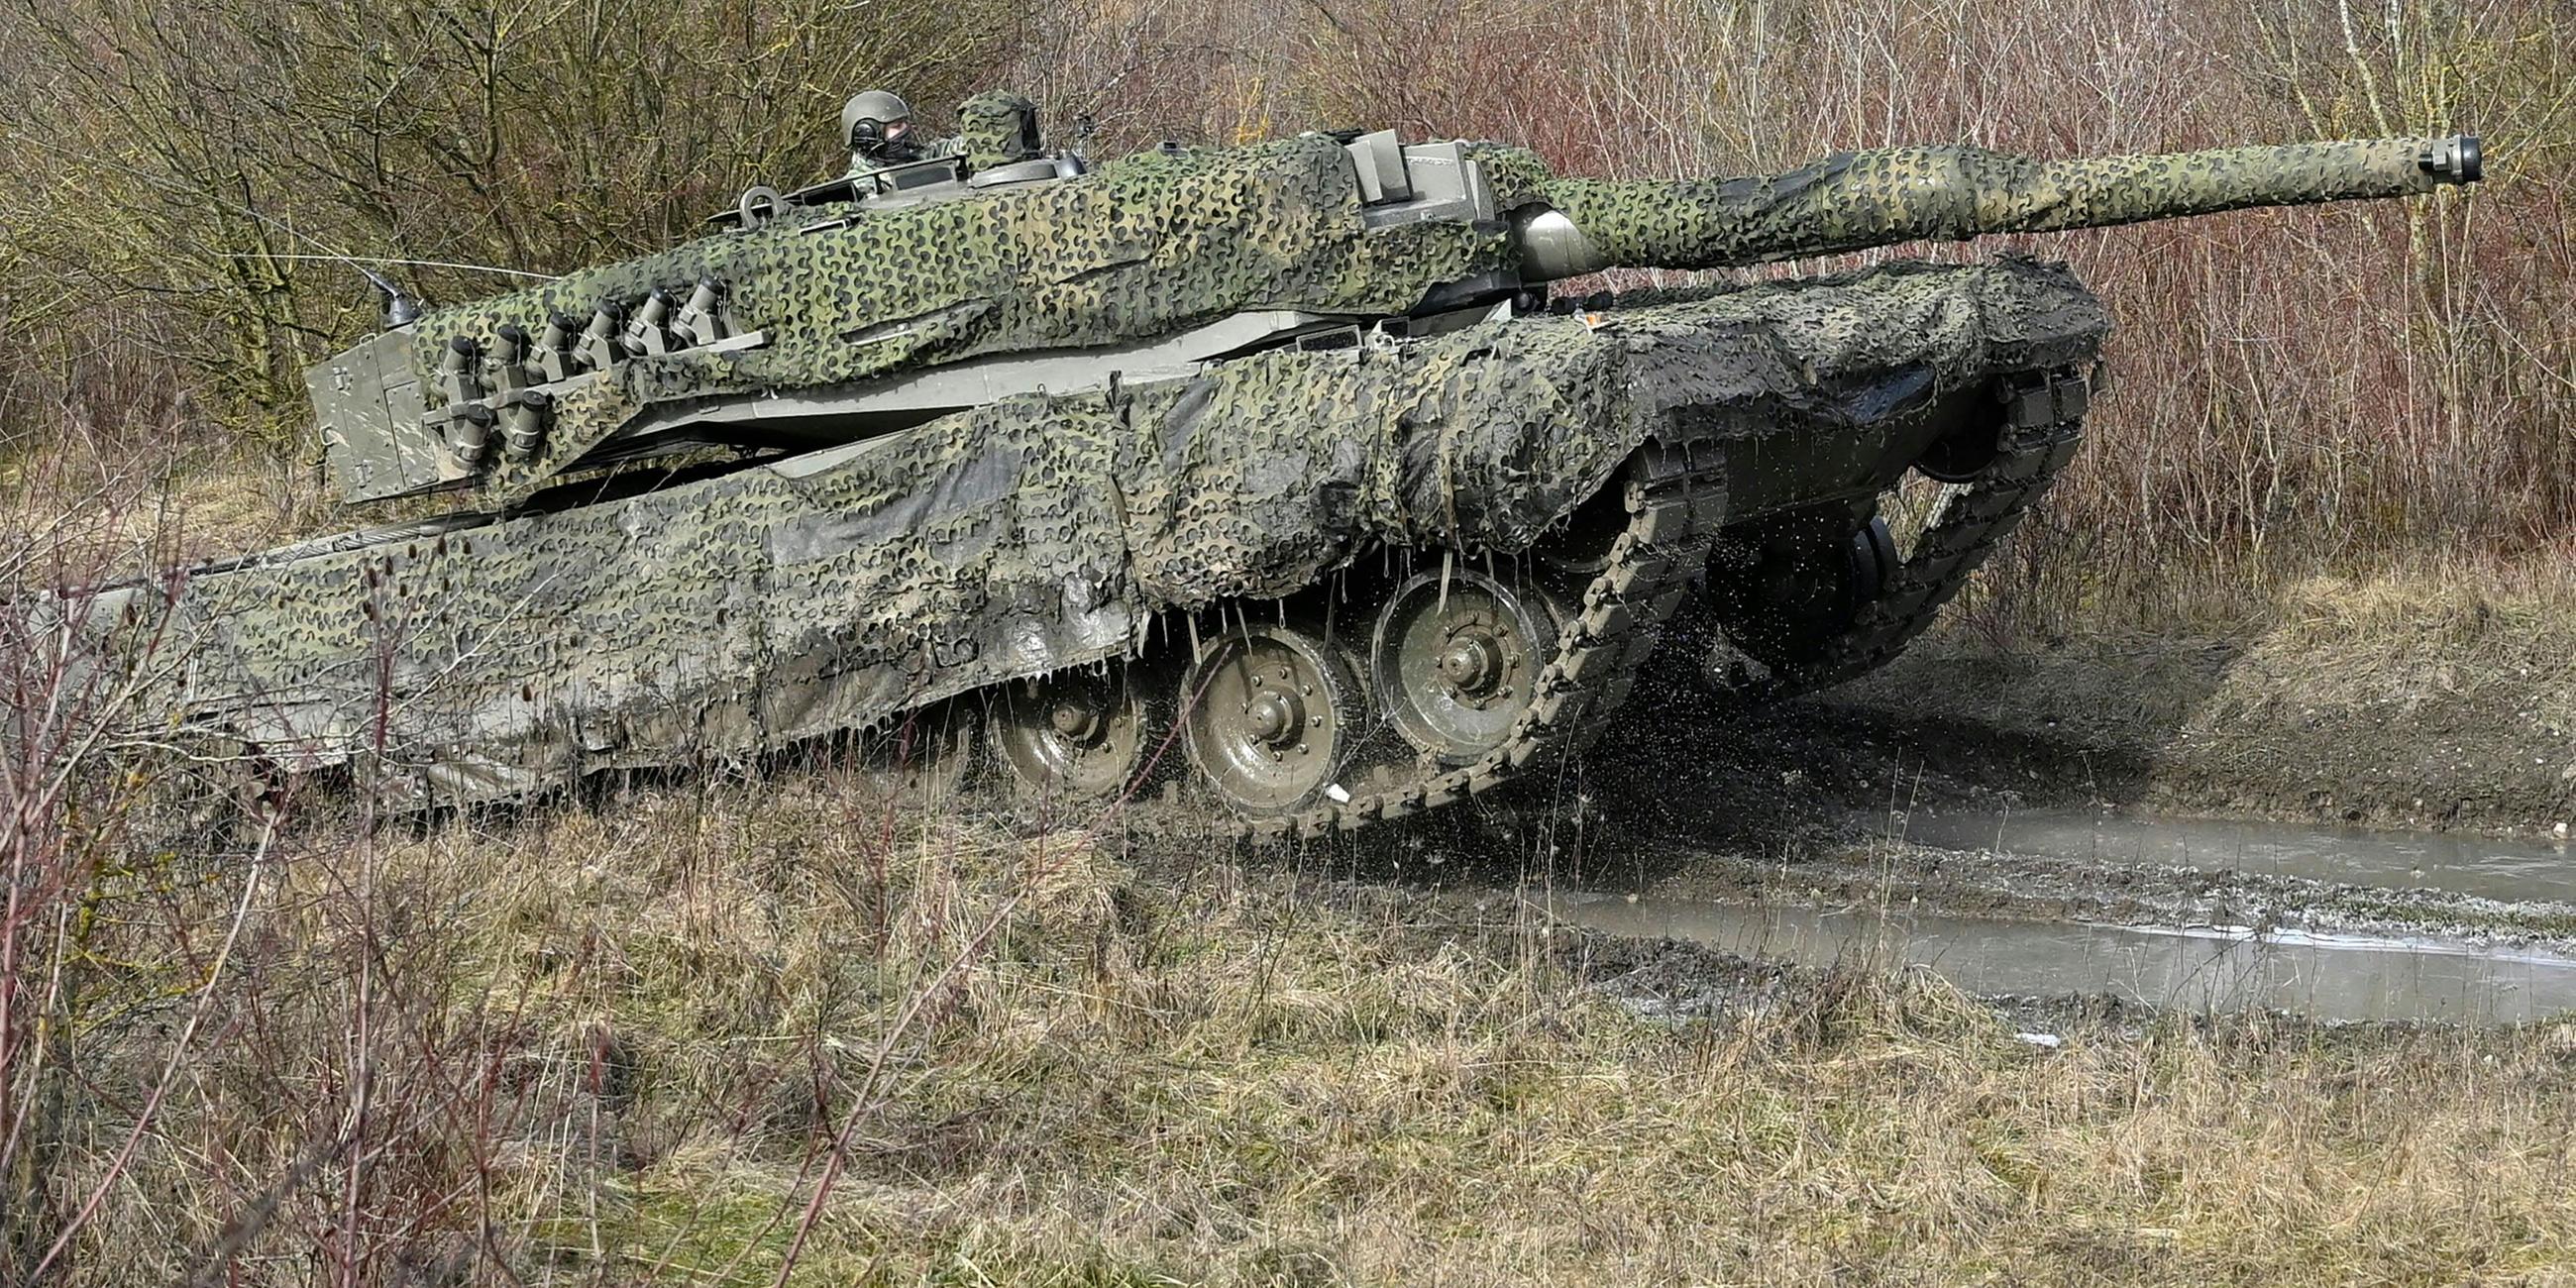 Vorführung des Kampfpanzers "Leopard 2A4" in Wels